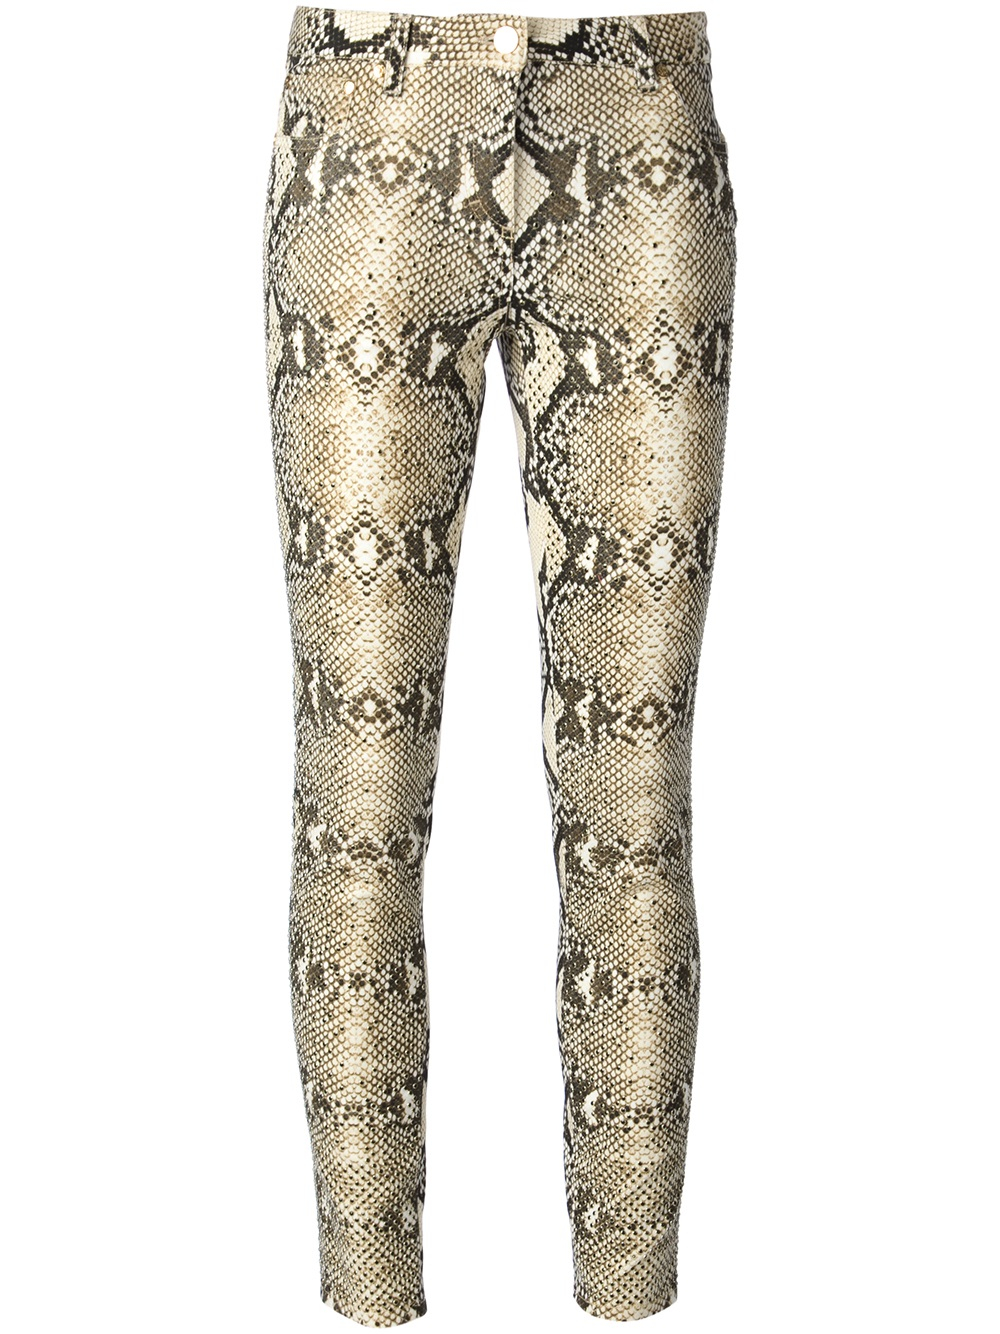 Roberto Cavalli Snakeskin Print Skinny Jeans in Brown - Lyst